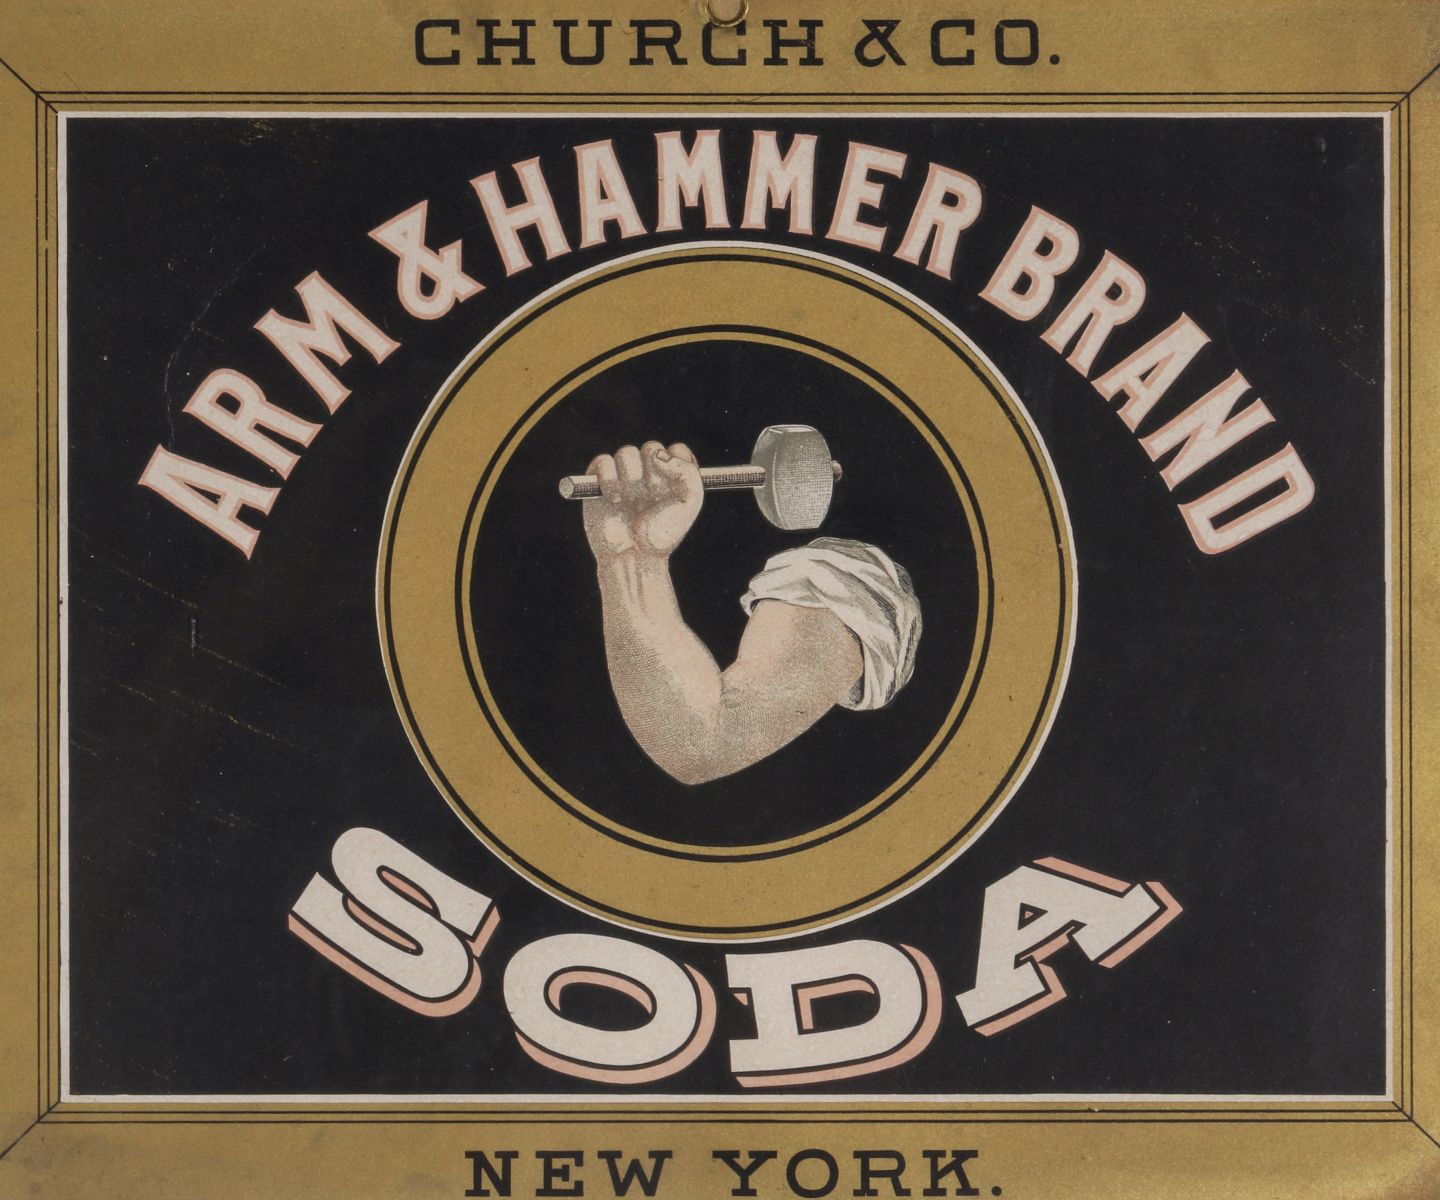 AN ARM & HAMMER BRAND SODA ADVERTISING PLACARD